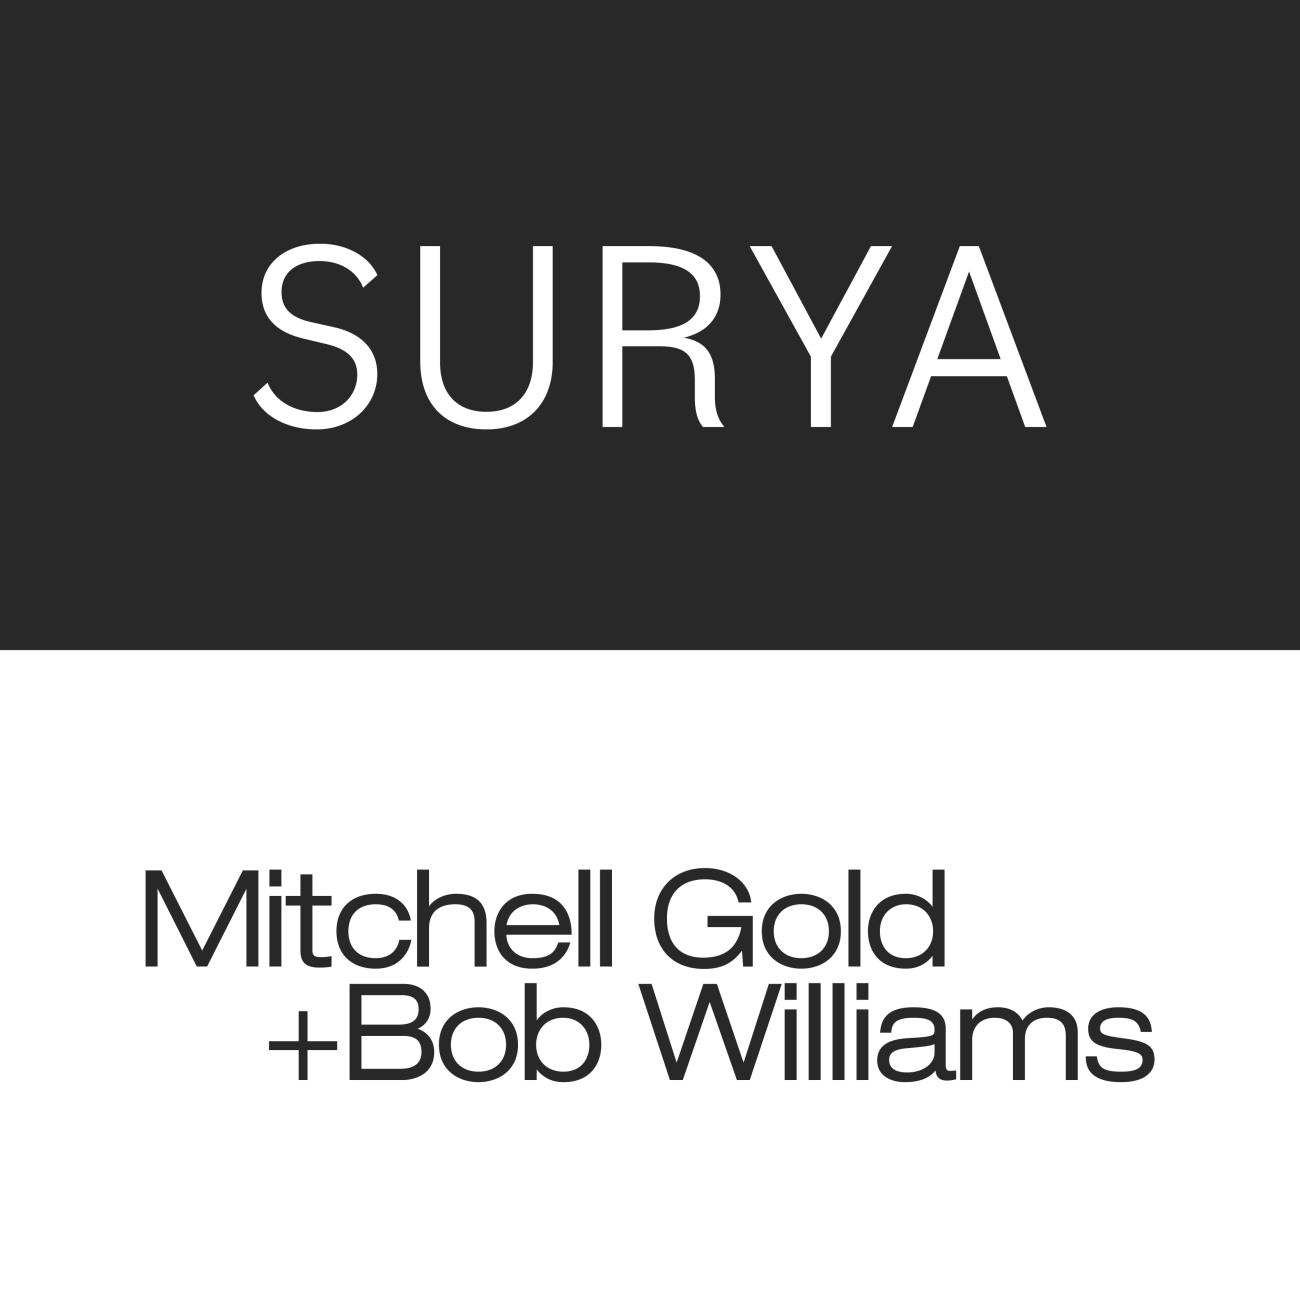 Surya, Mitchell Gold logos